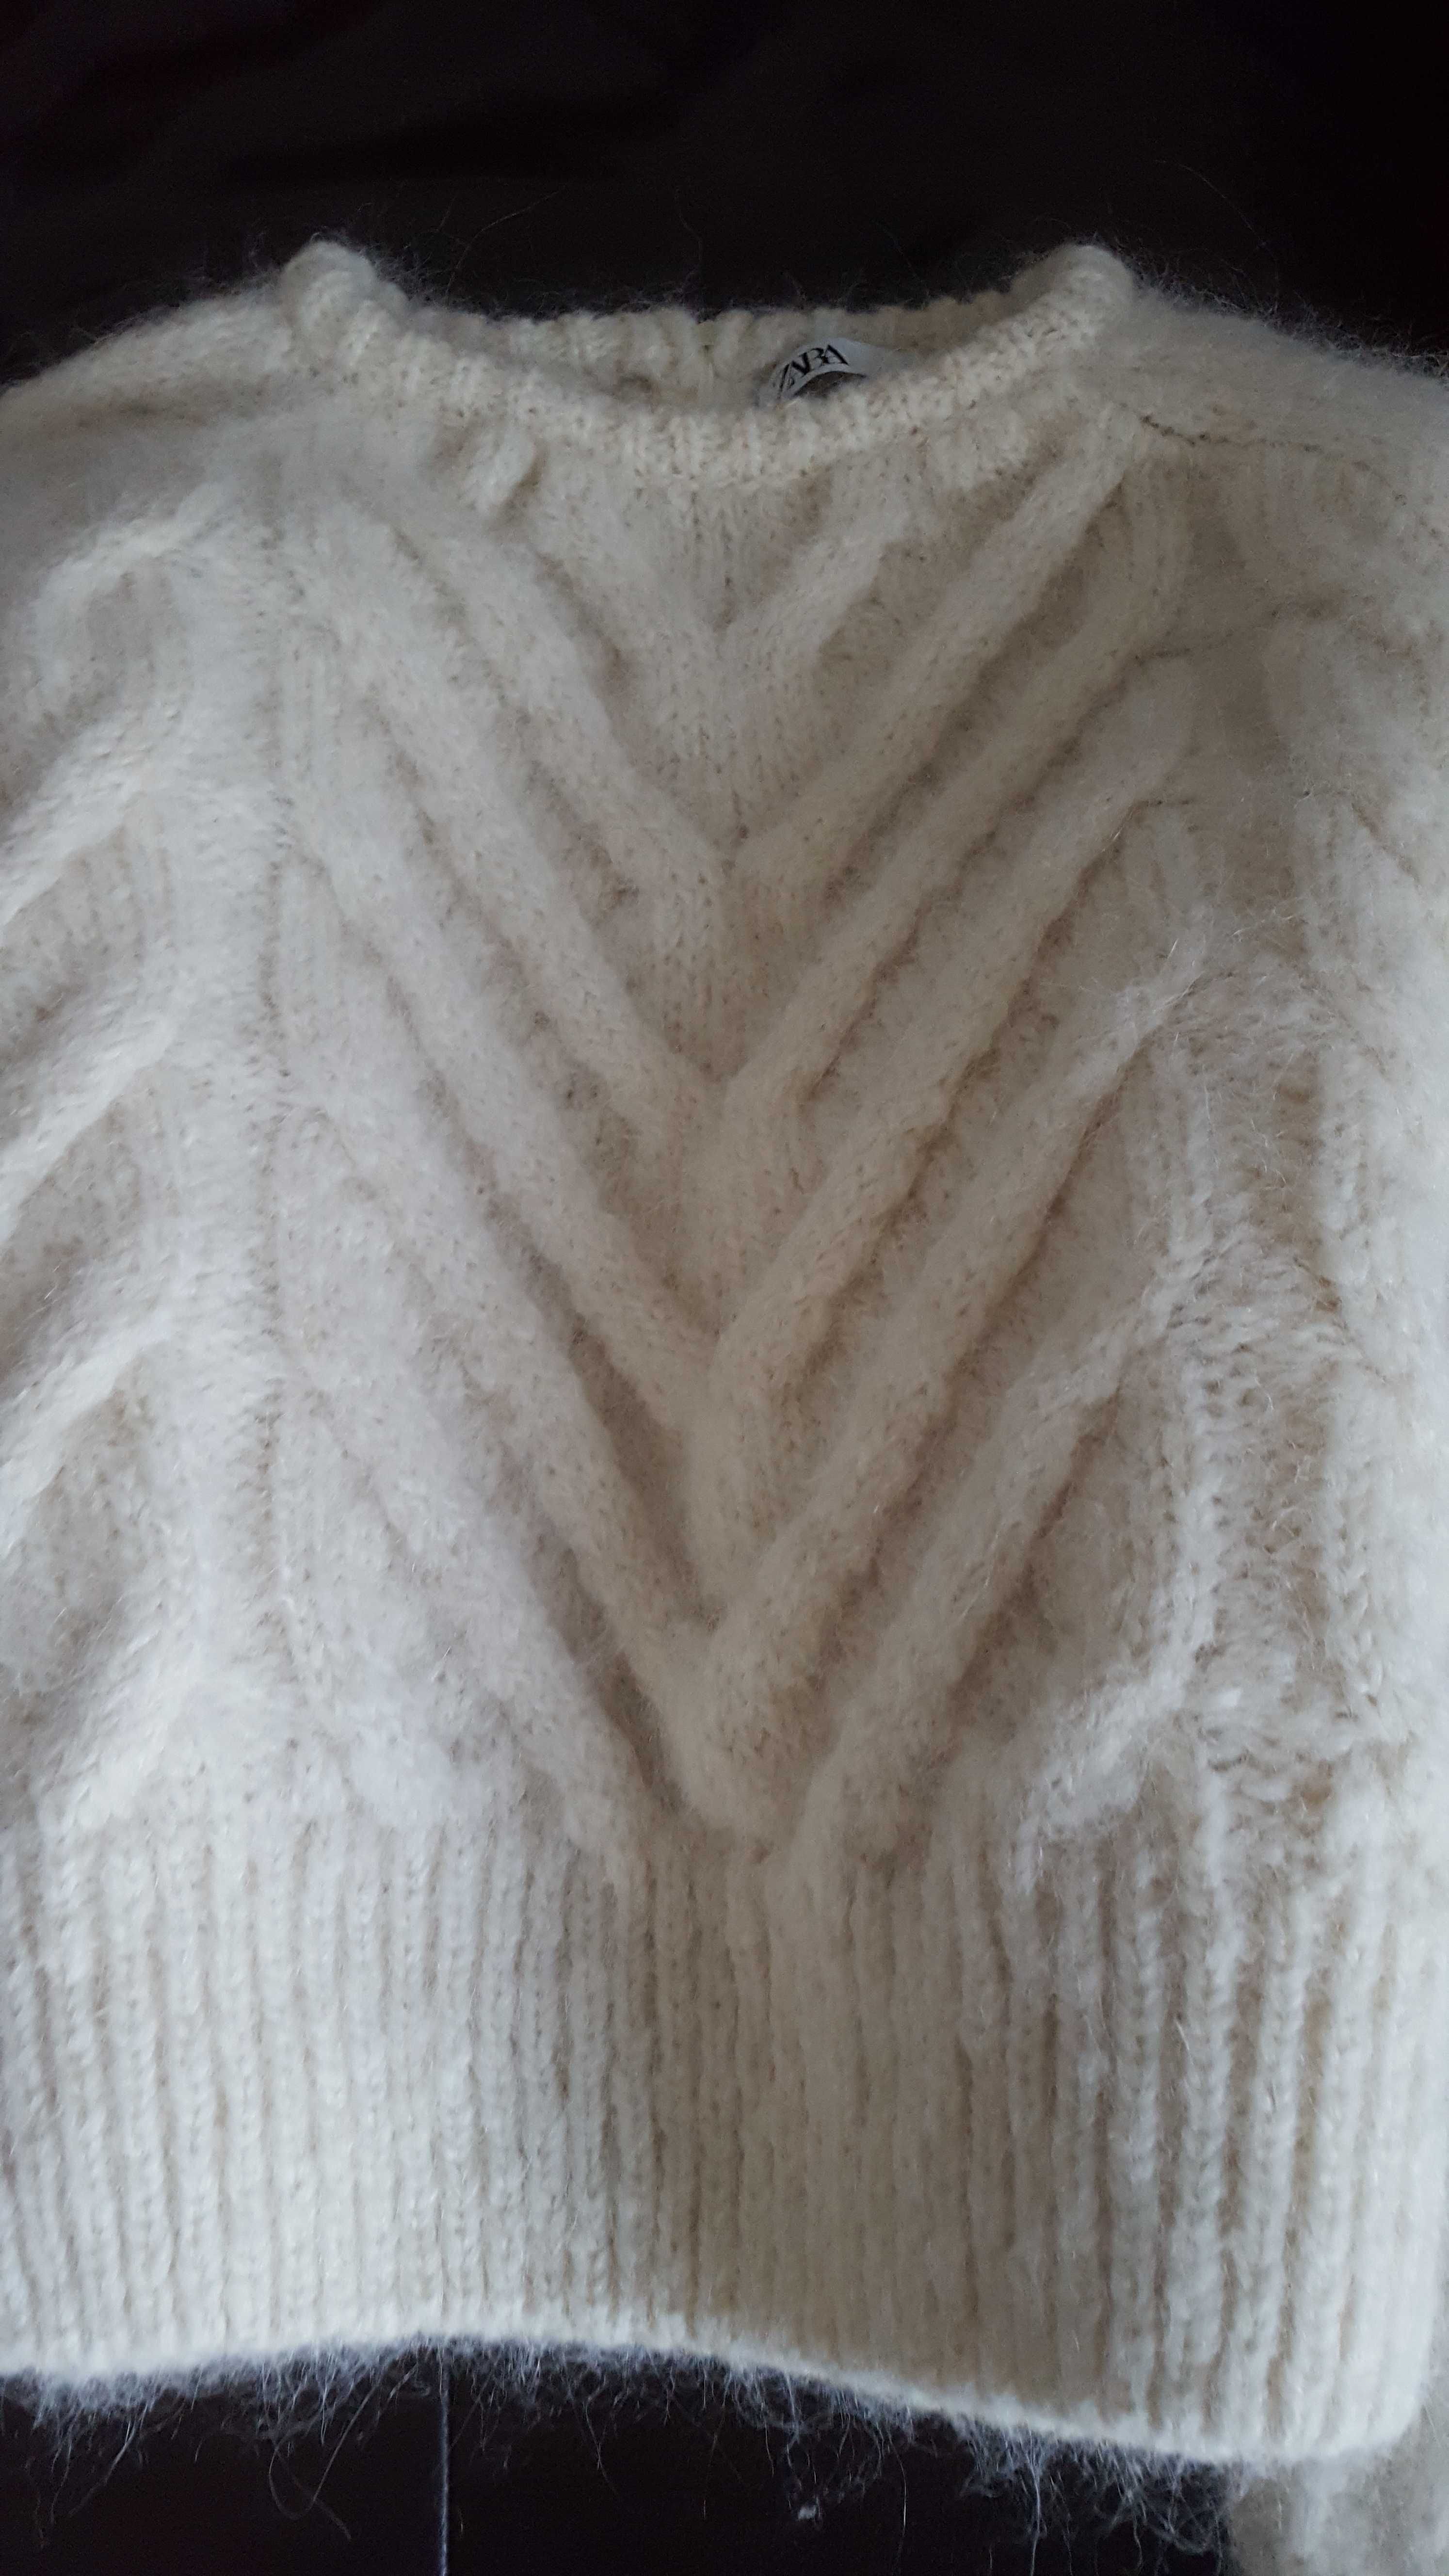 Śmietana 85% Wełna Alpaka sweterek Premium Krem